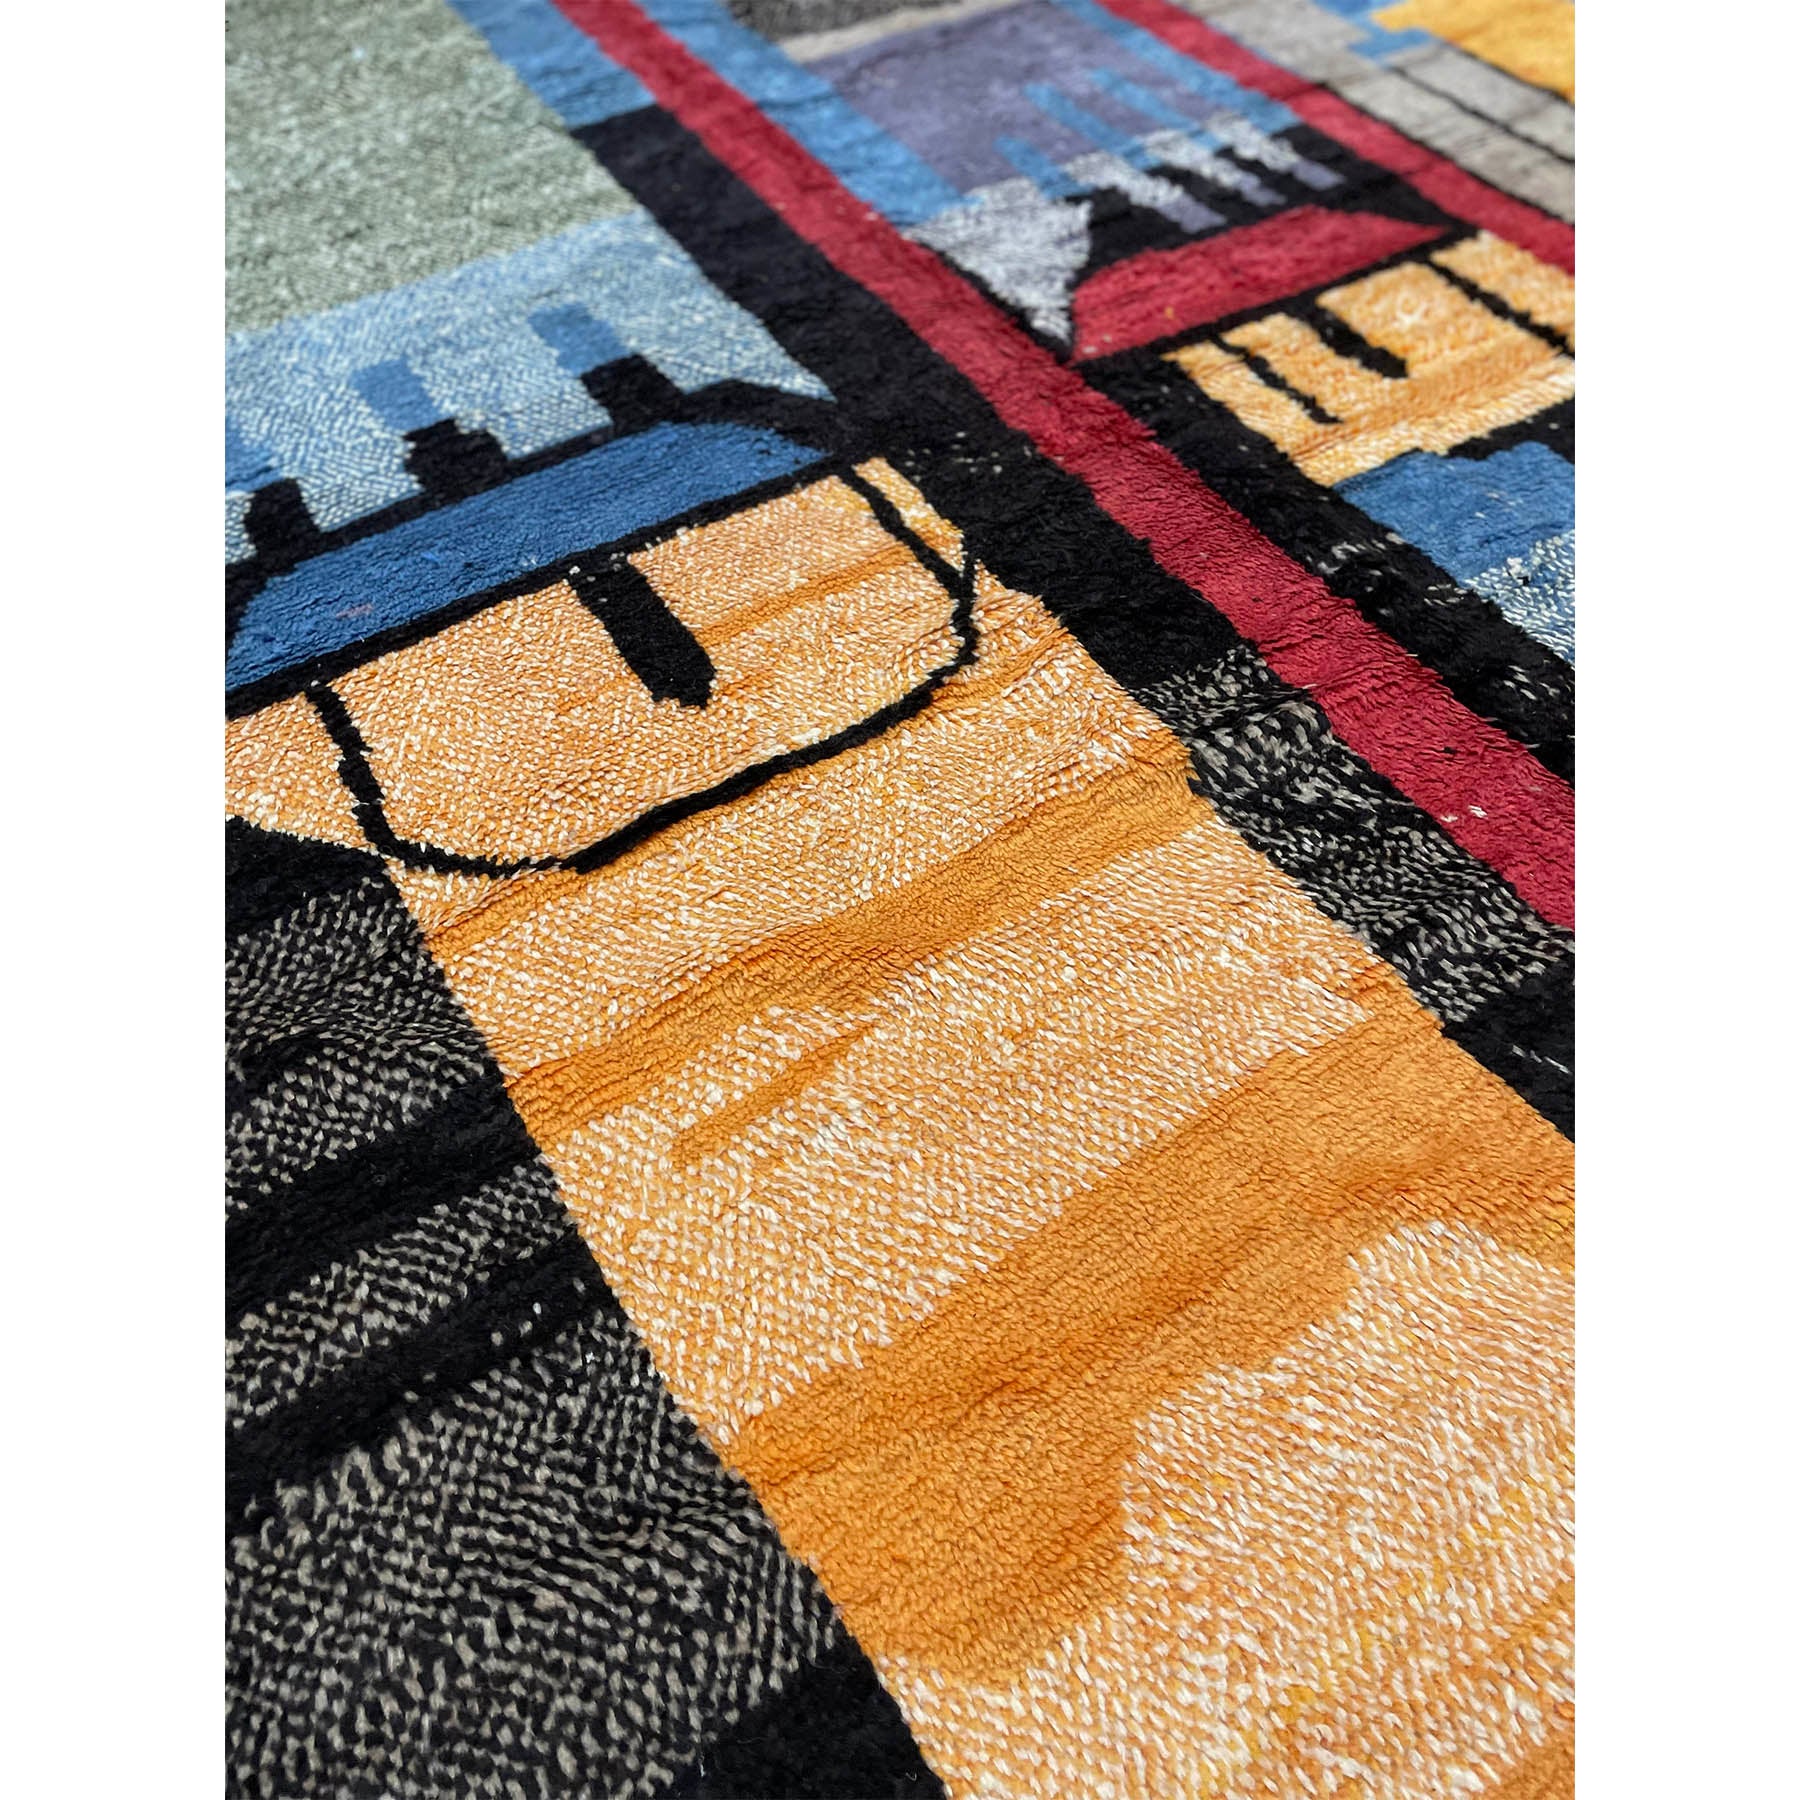 Handwoven boho chic colorful Moroccan area rug - Kantara | Moroccan Rugs